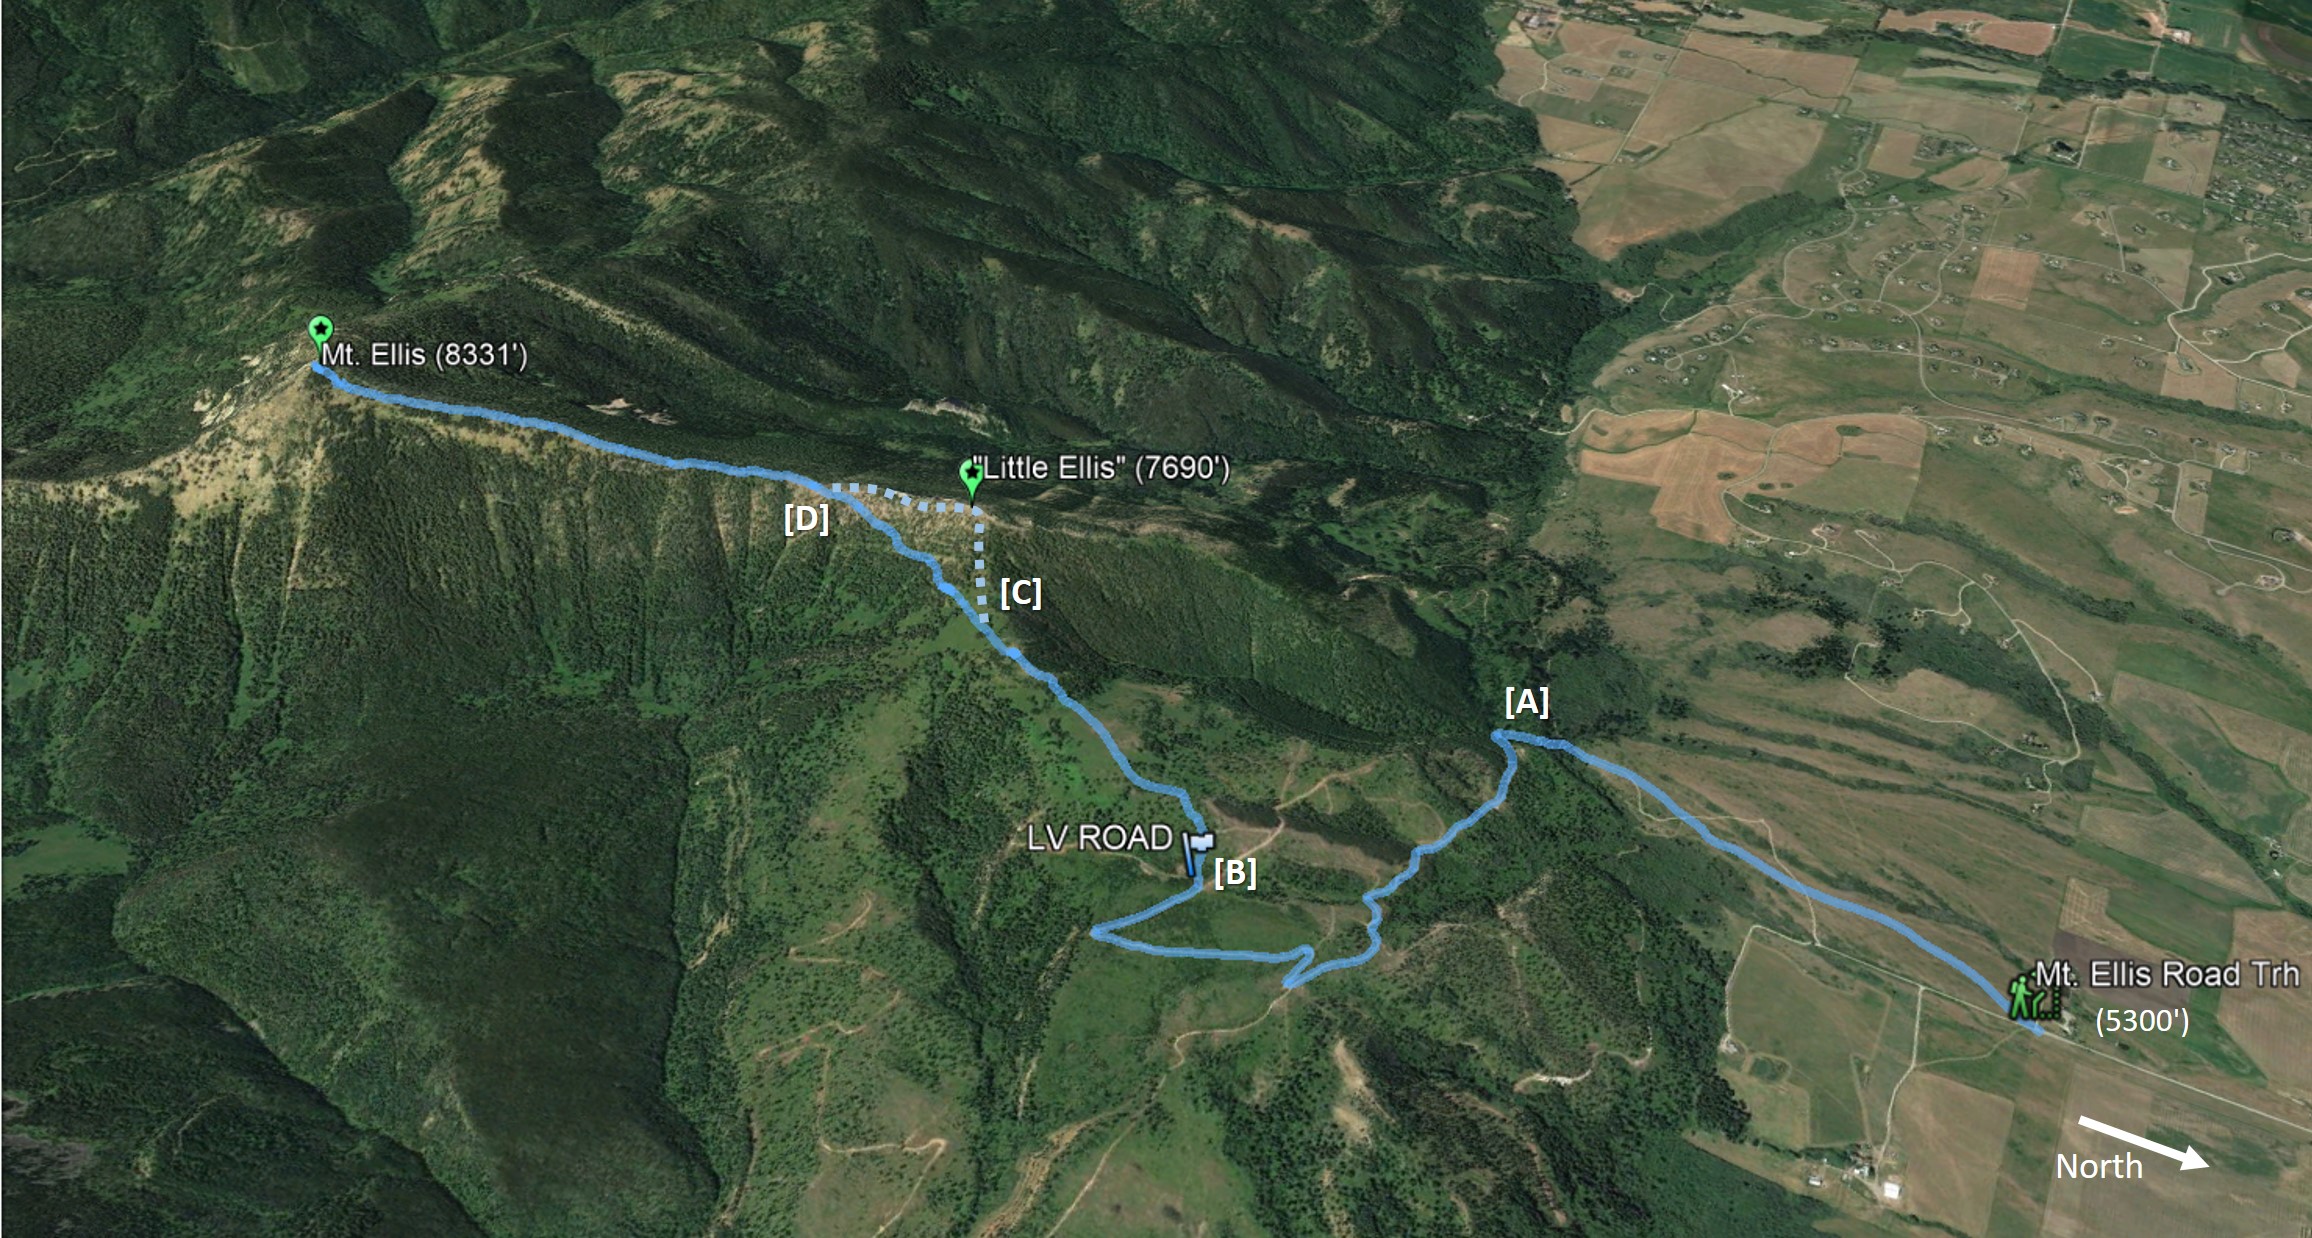 google earth view of ascent to Mt. Ellis via Mt. Ellis trailhead